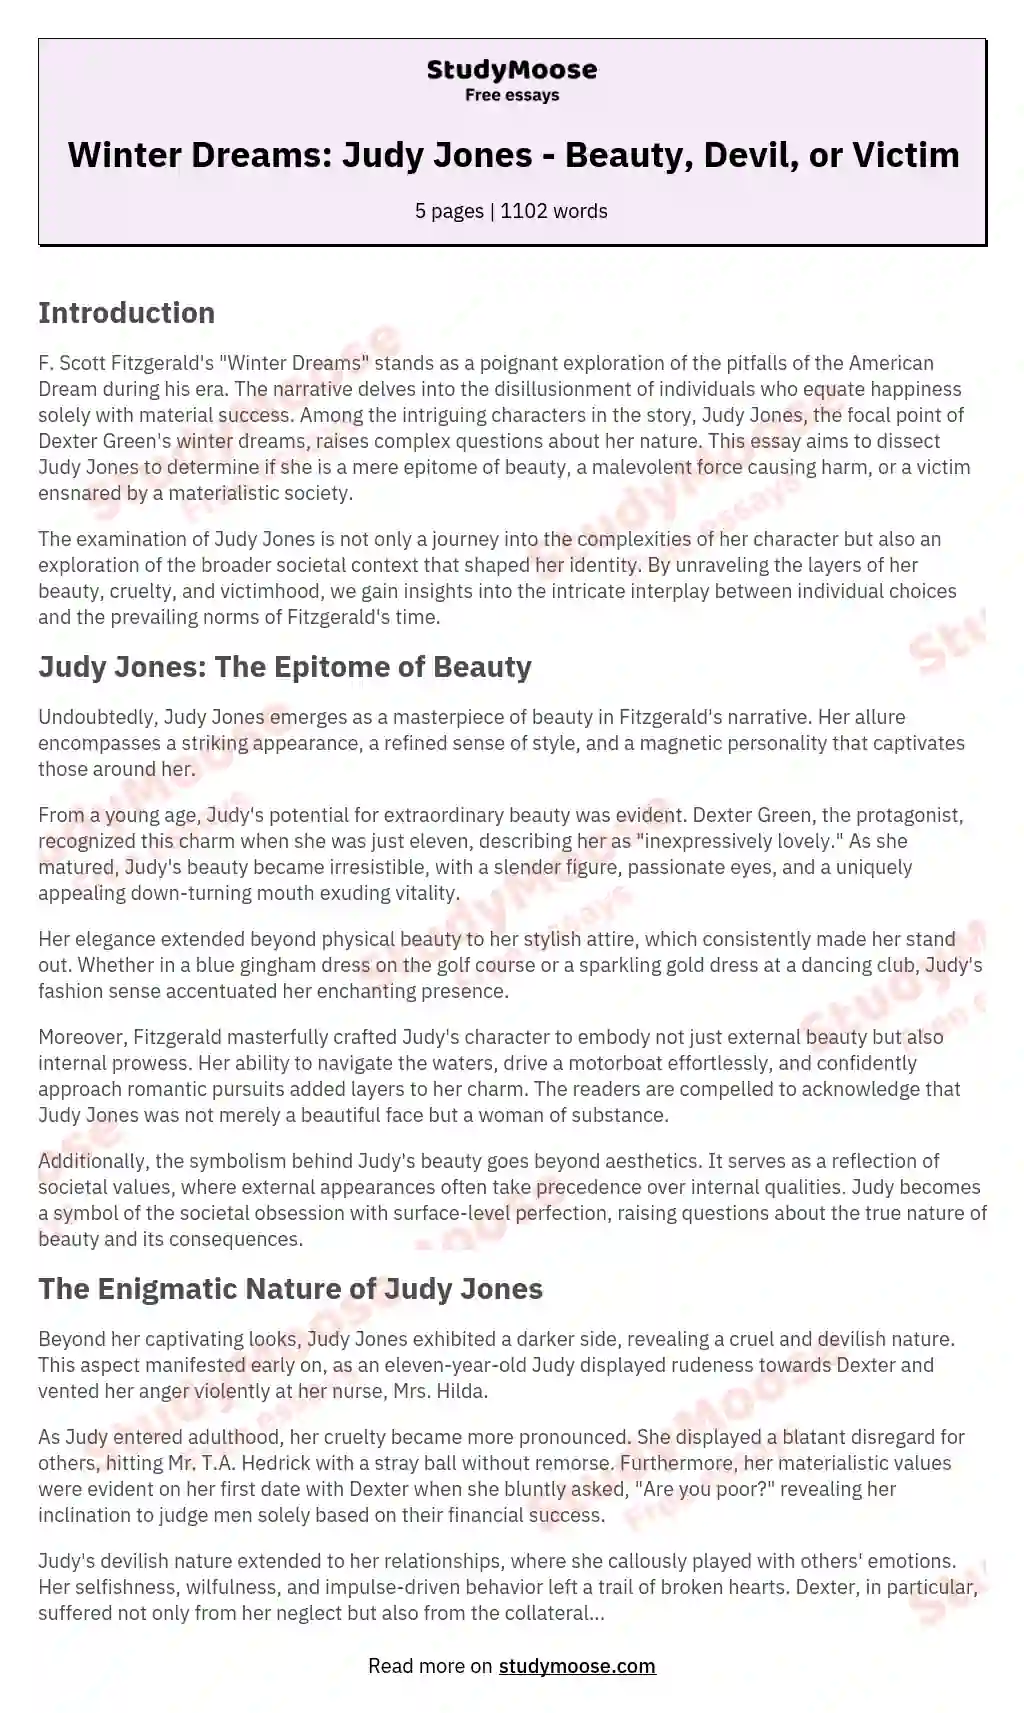 Judy Jones - beauty, devil, or victim?